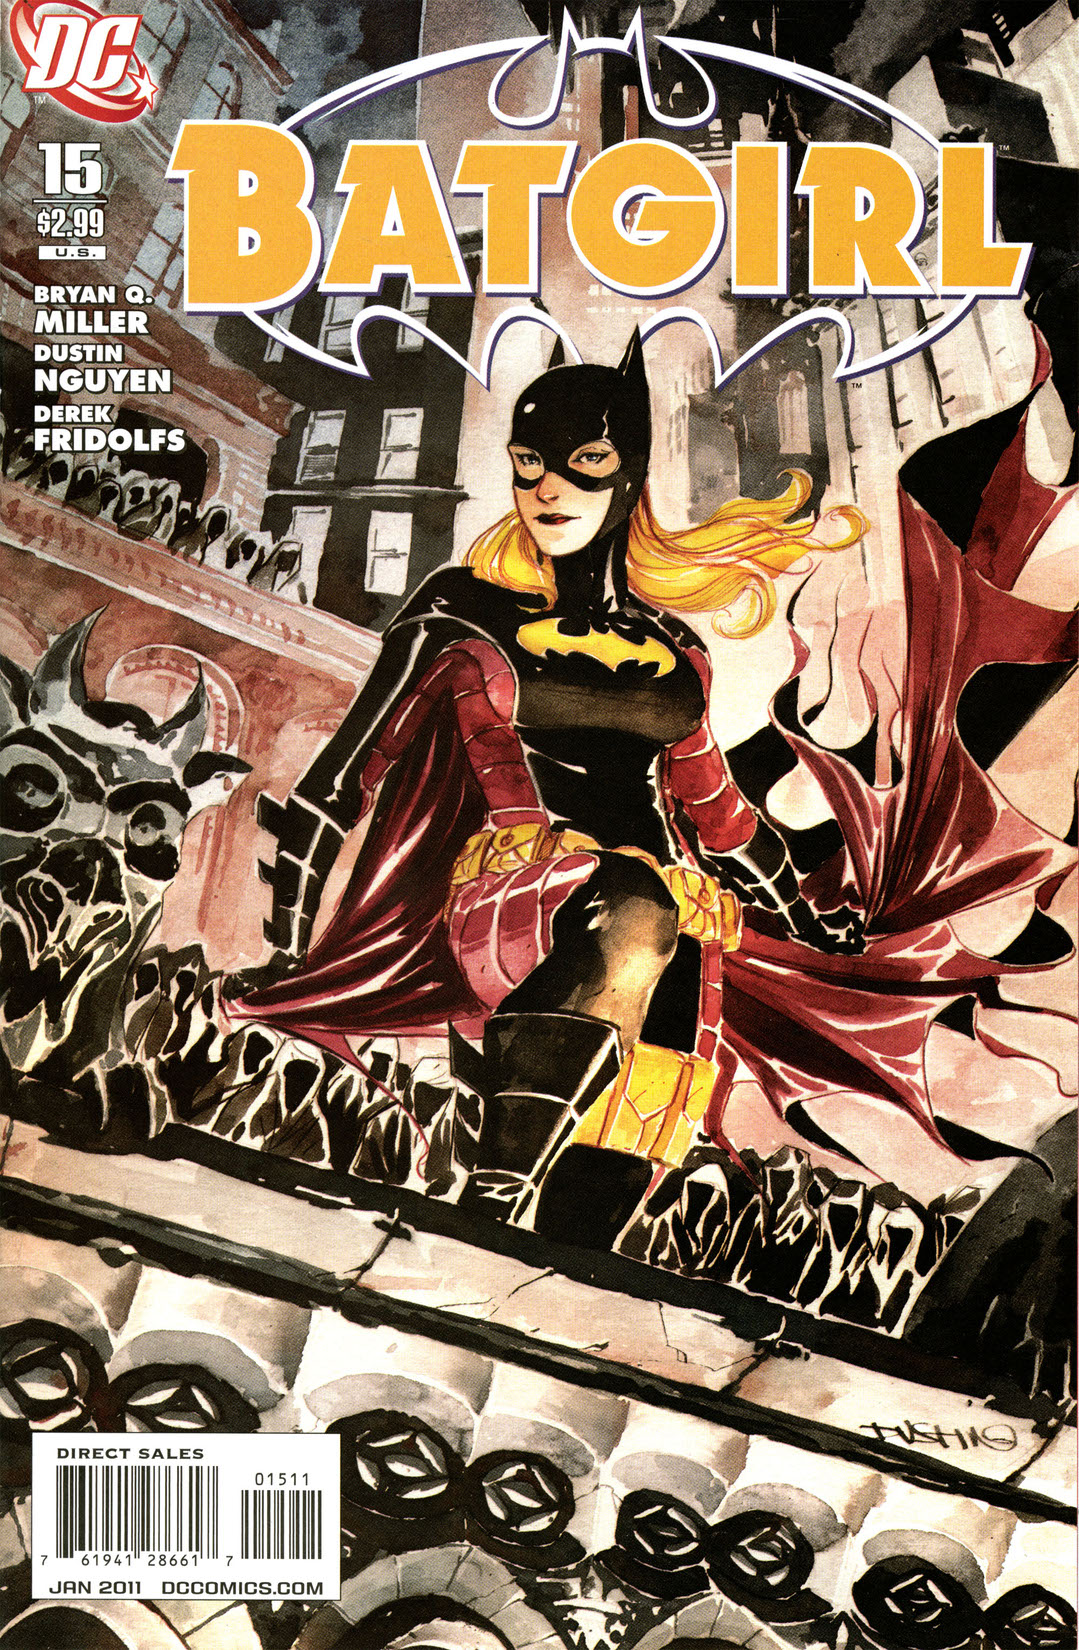 Batgirl (2009-) #15 preview images